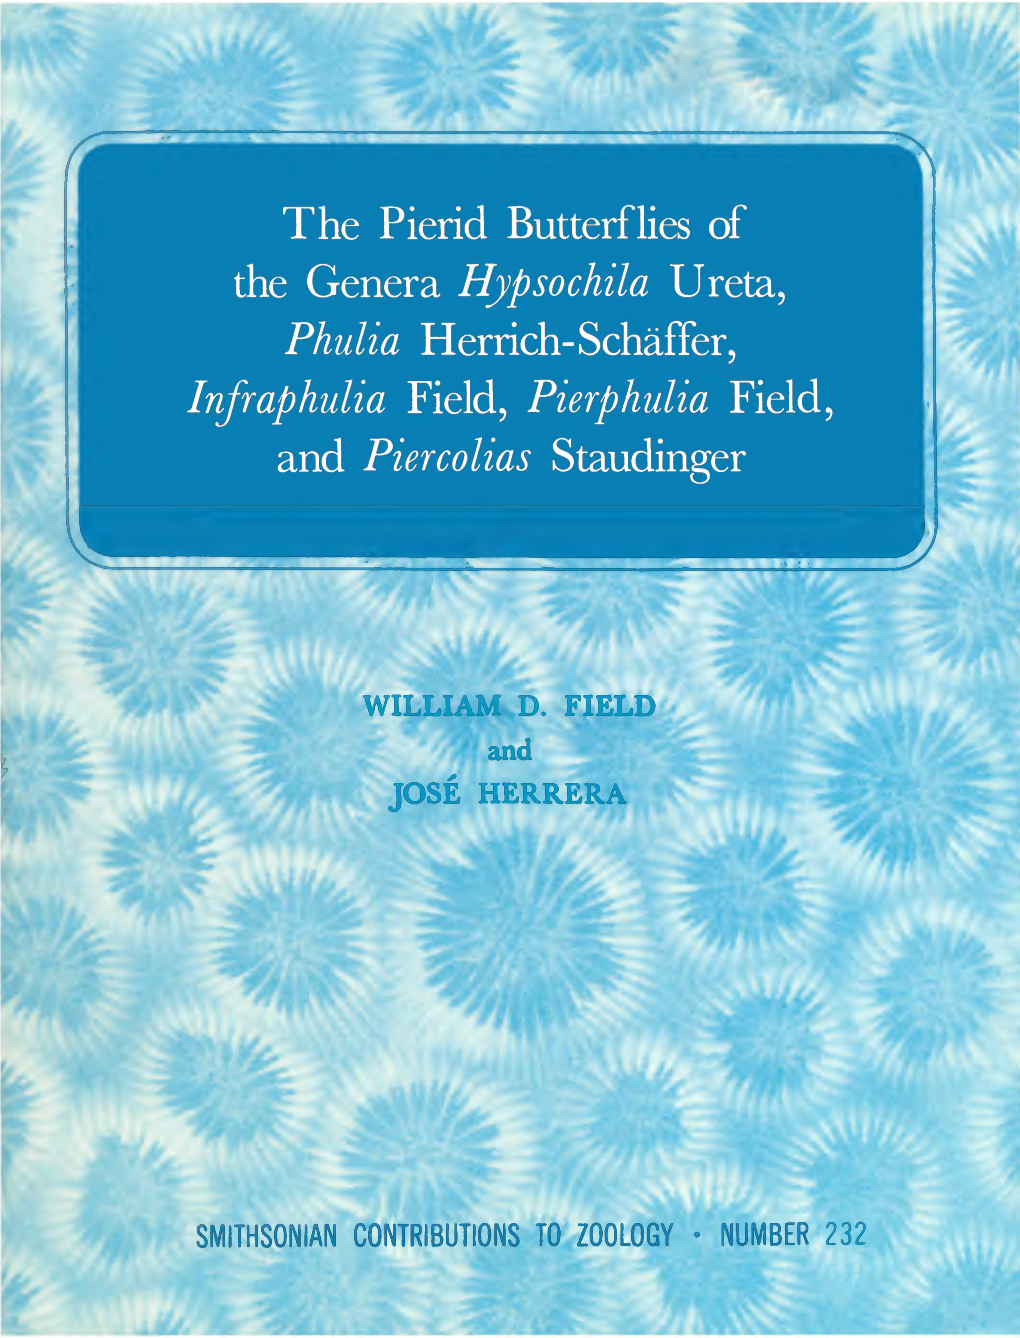 The Pierid Butterflies of the Genera Hypsochila Ureta, Phulia Herrich-Schaffer, Infraphulia Field, Pierphulia Field, and Pierco Lias Staudinger